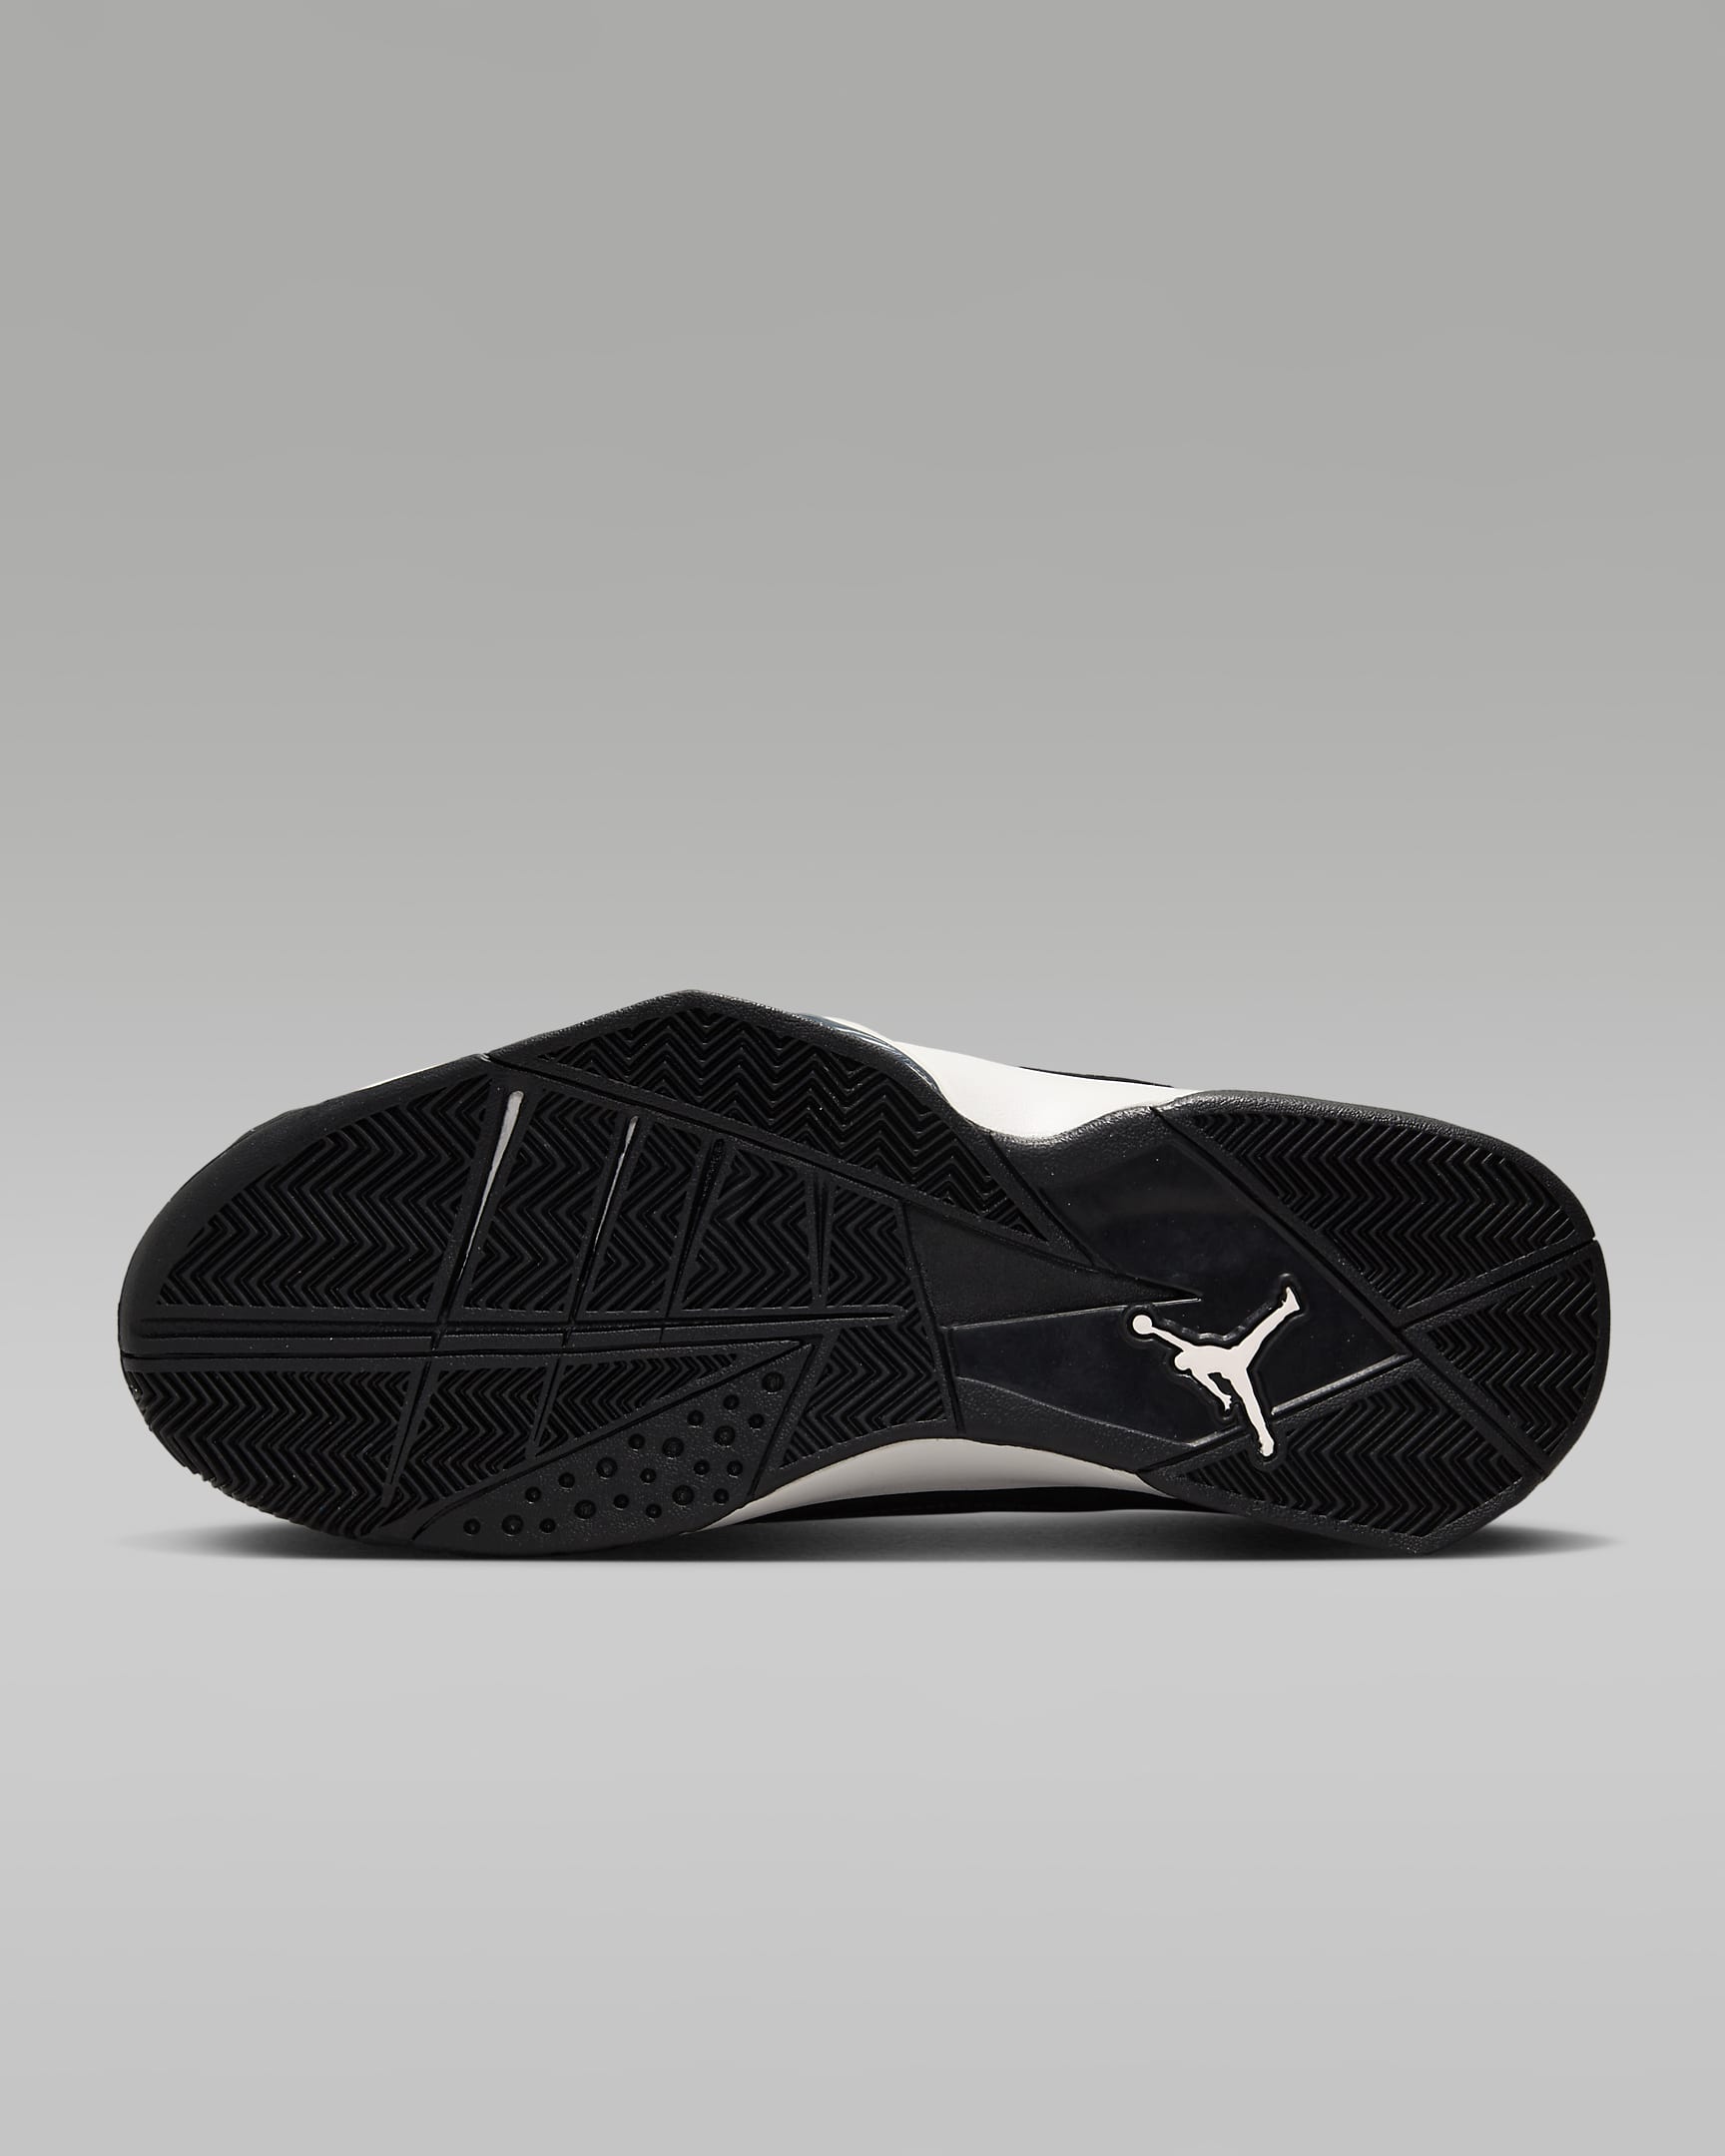 Jordan True Flight Men's Shoes - Black/Anthracite/Phantom